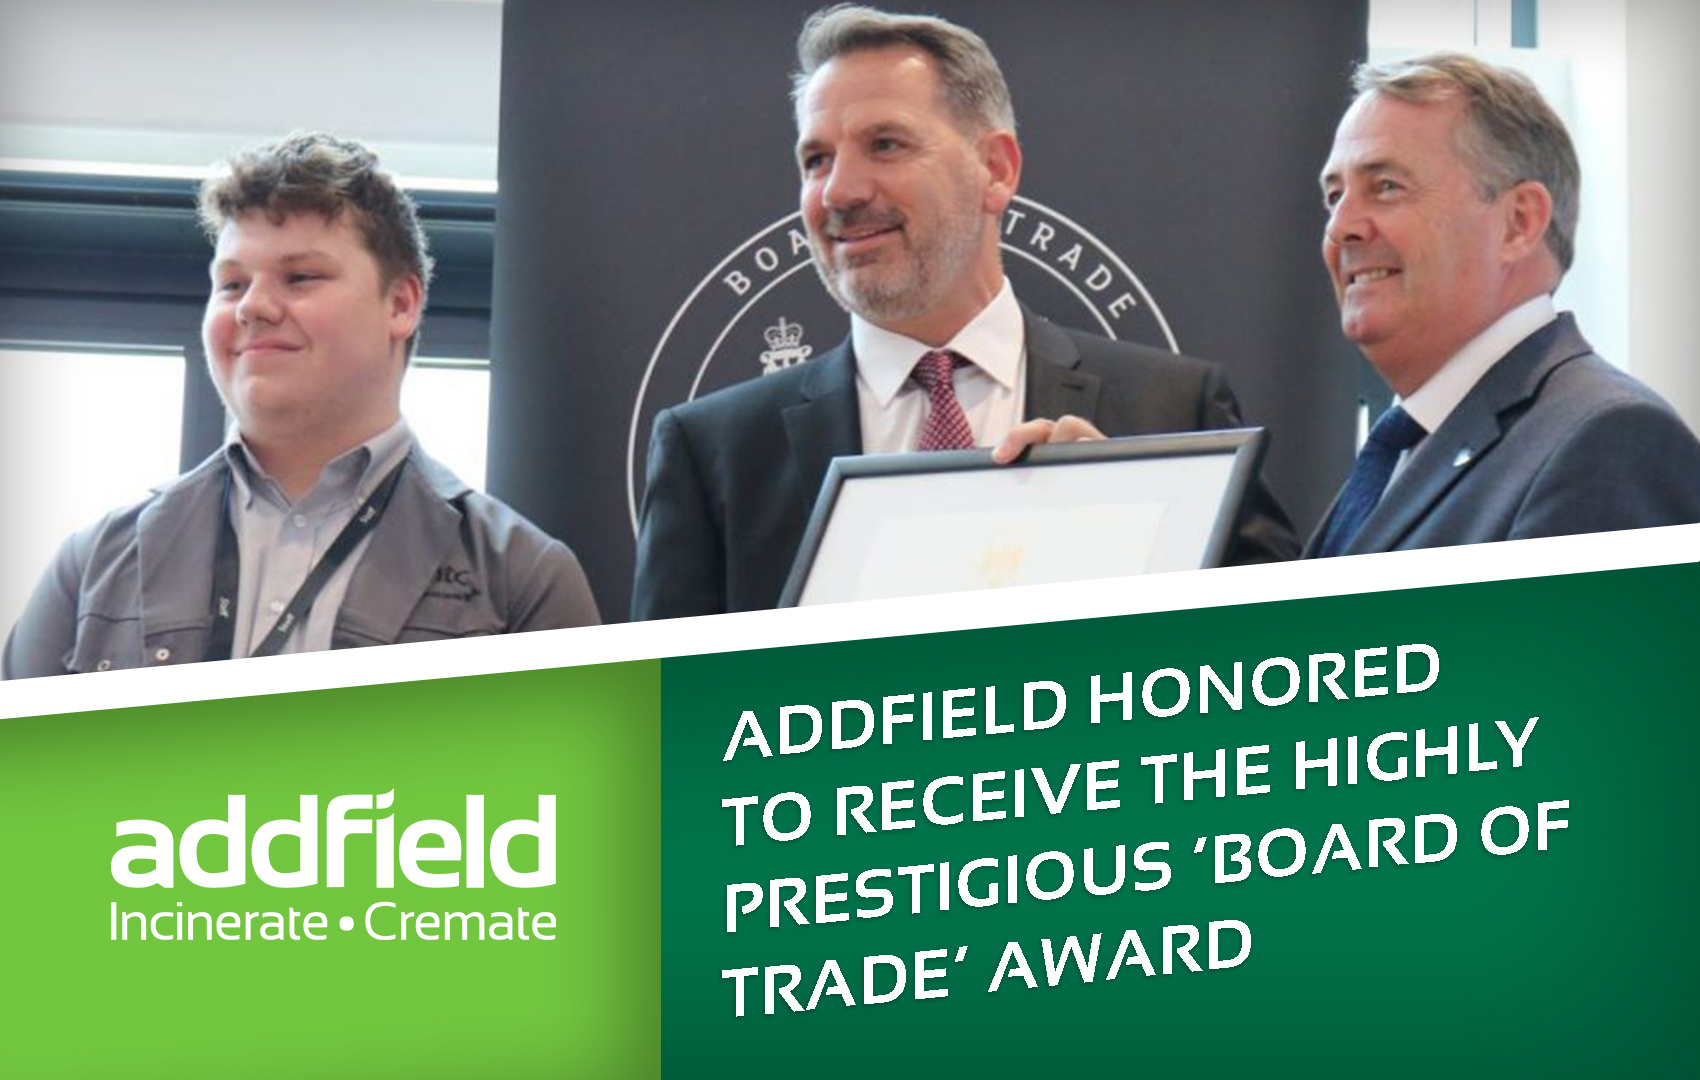 Steve lloyd receiving the board of trade award